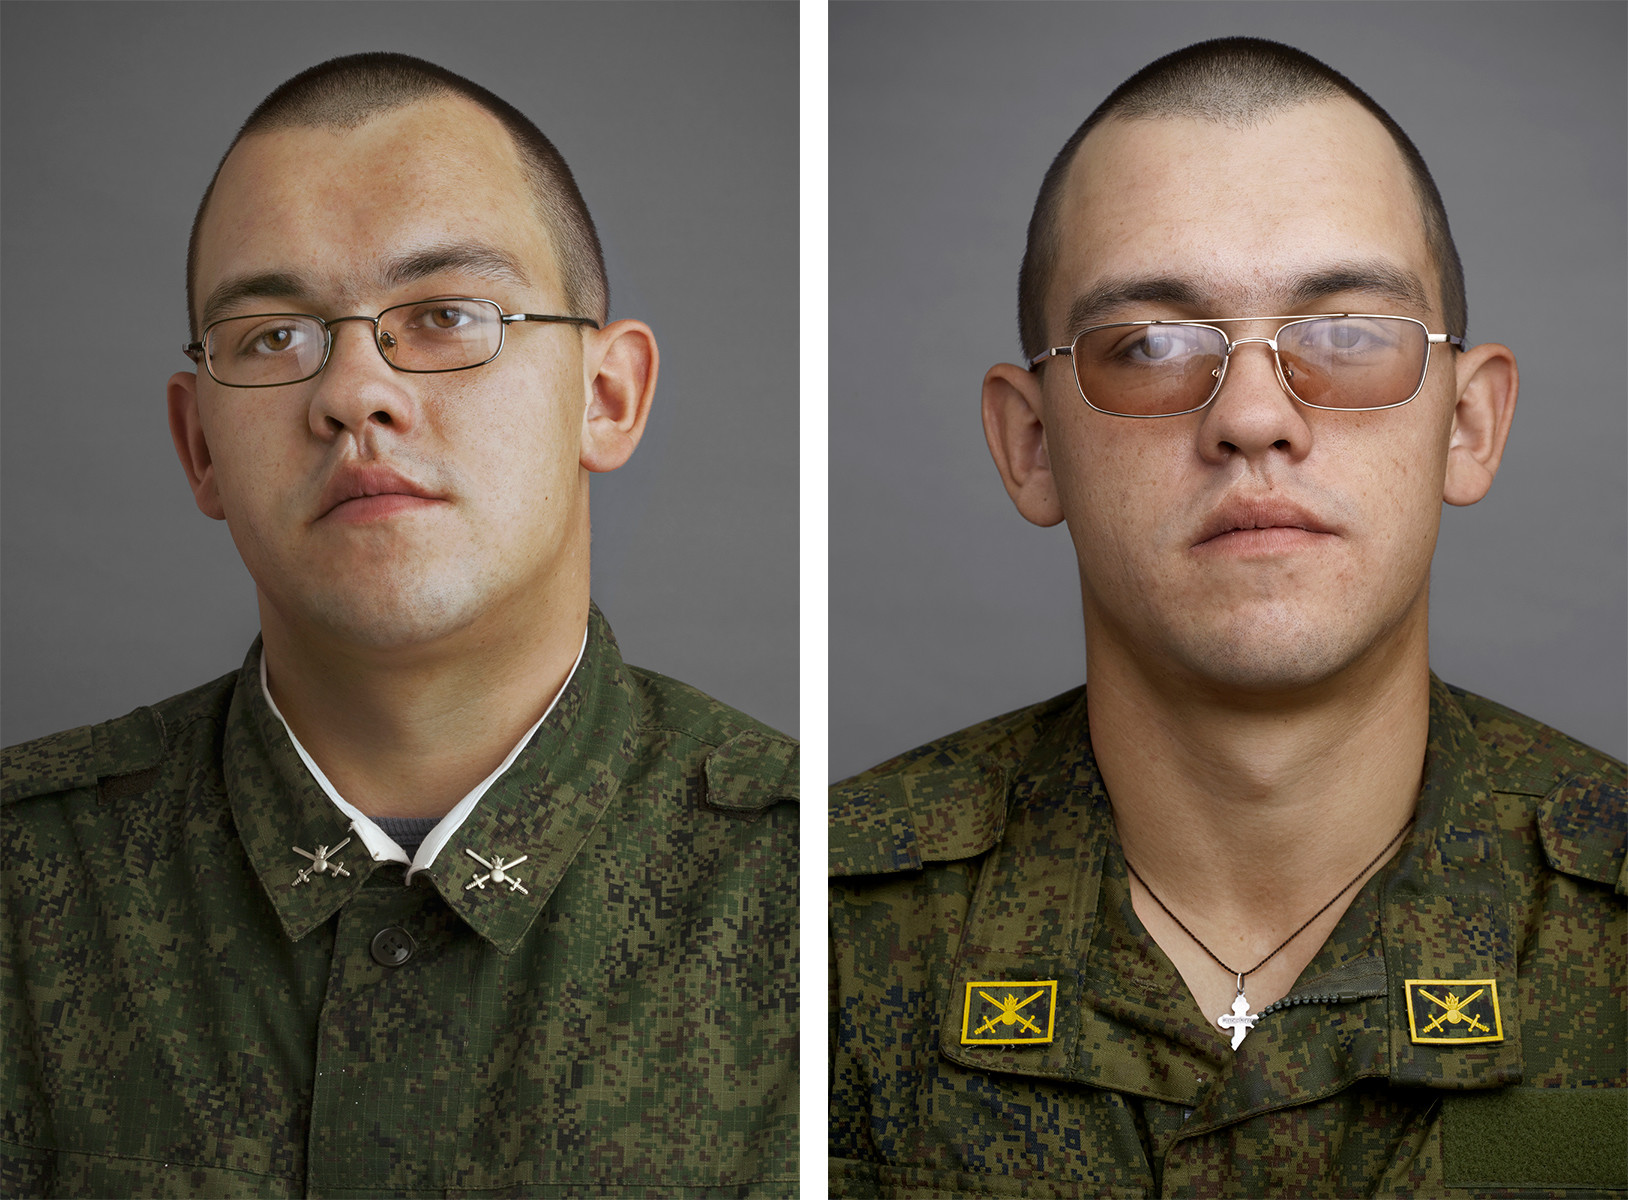 Люди до и после армии